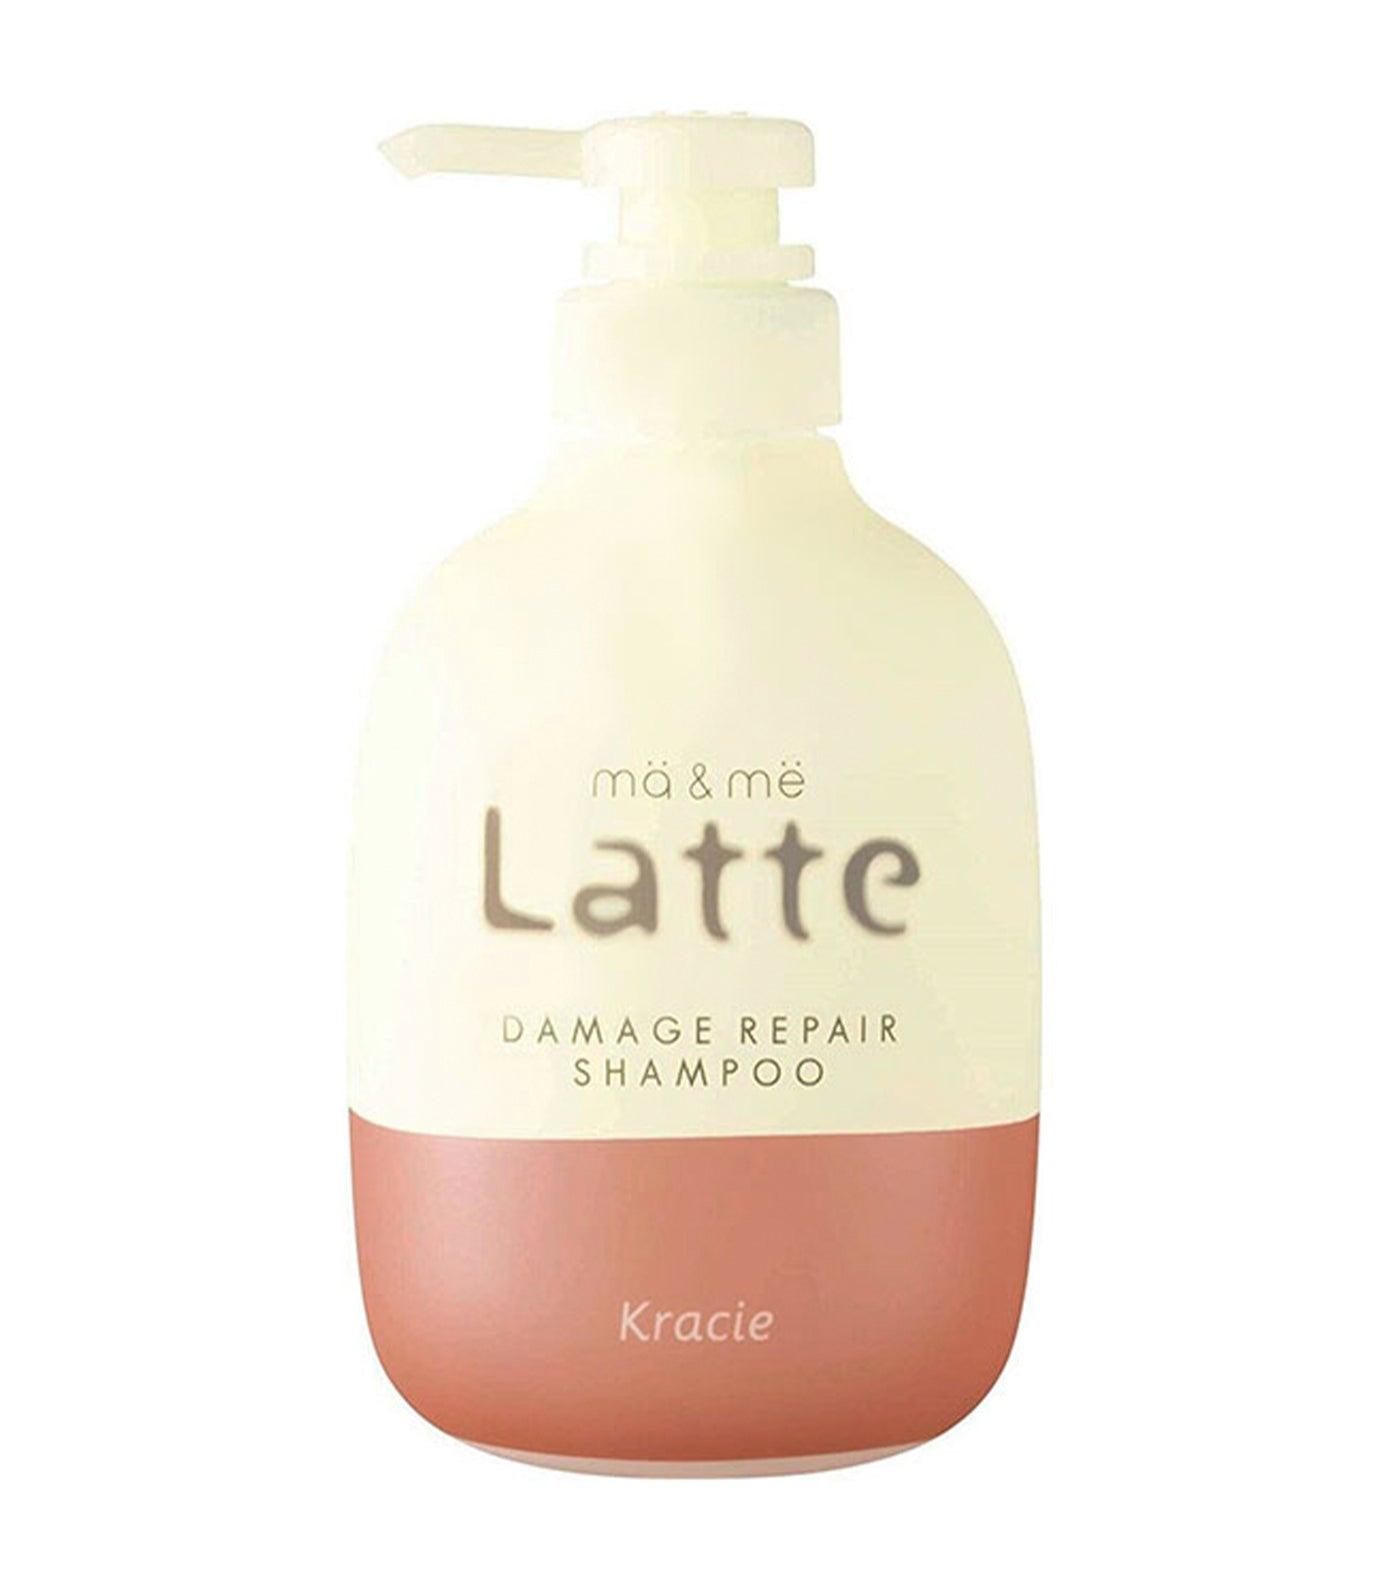 Latte Damage Care Shampoo